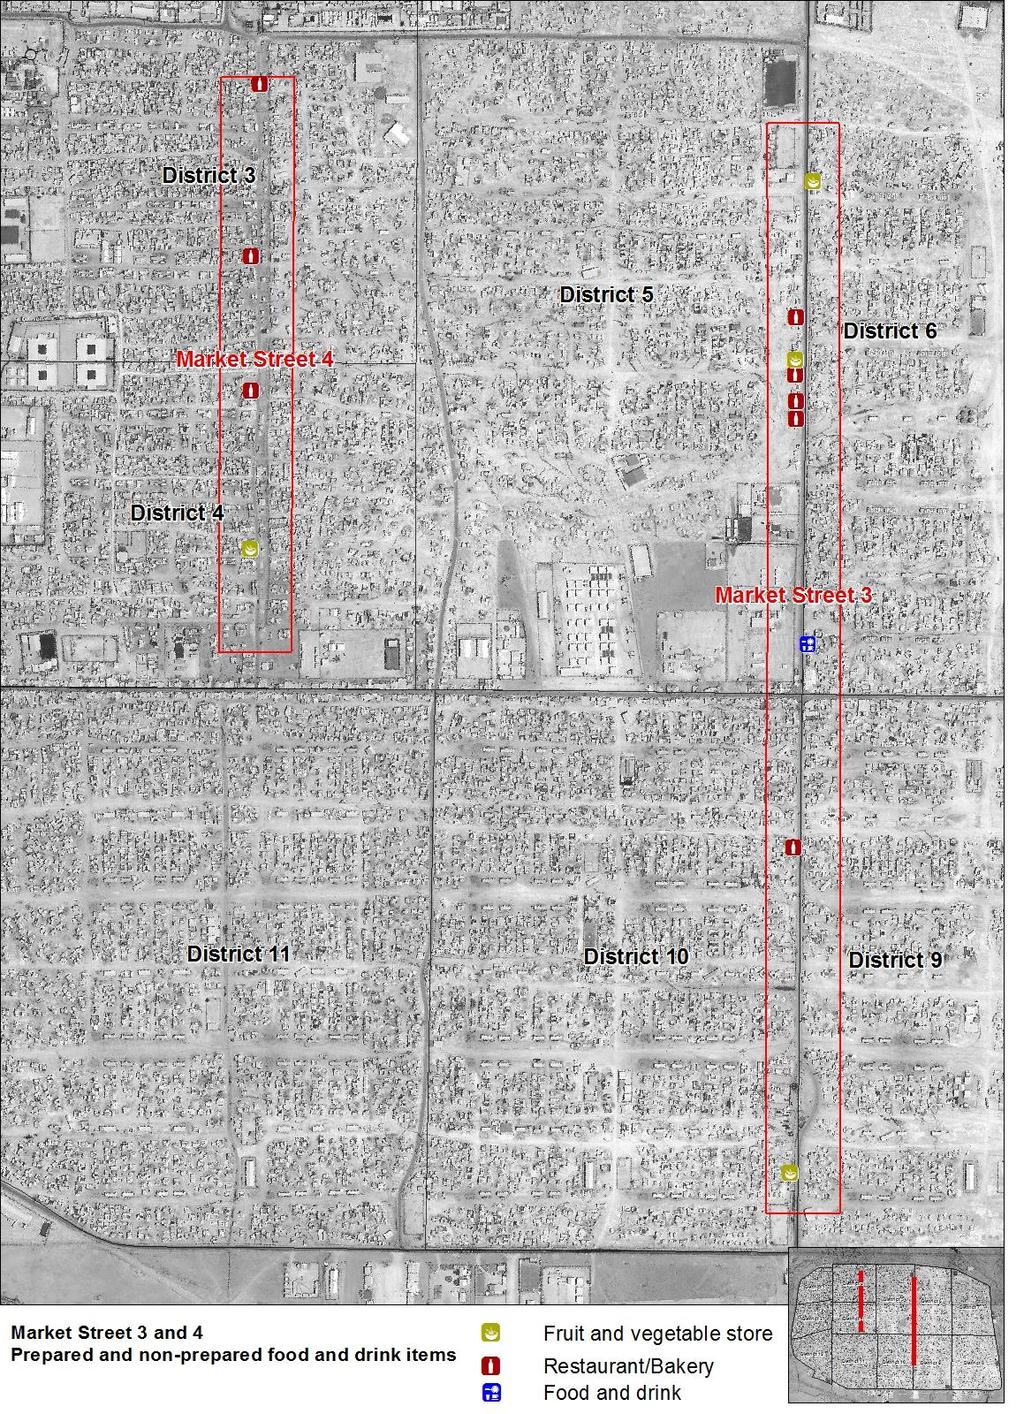 Map 6: Market Street 3 and Market Street 4: